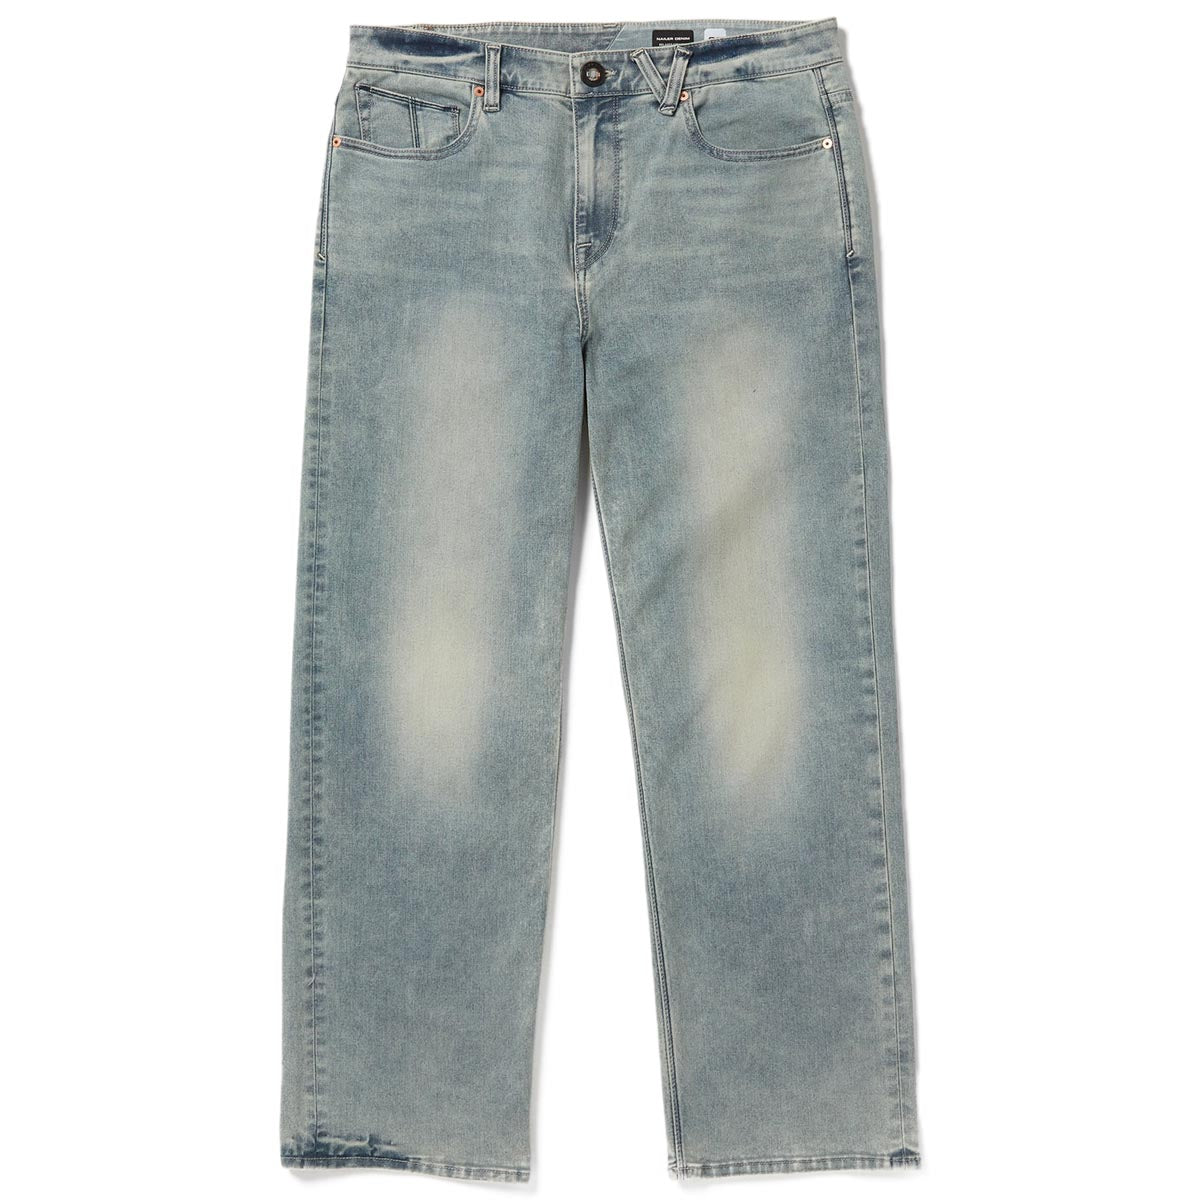 Volcom Nailer Denim Jeans - Sure Shot Light Wash image 1